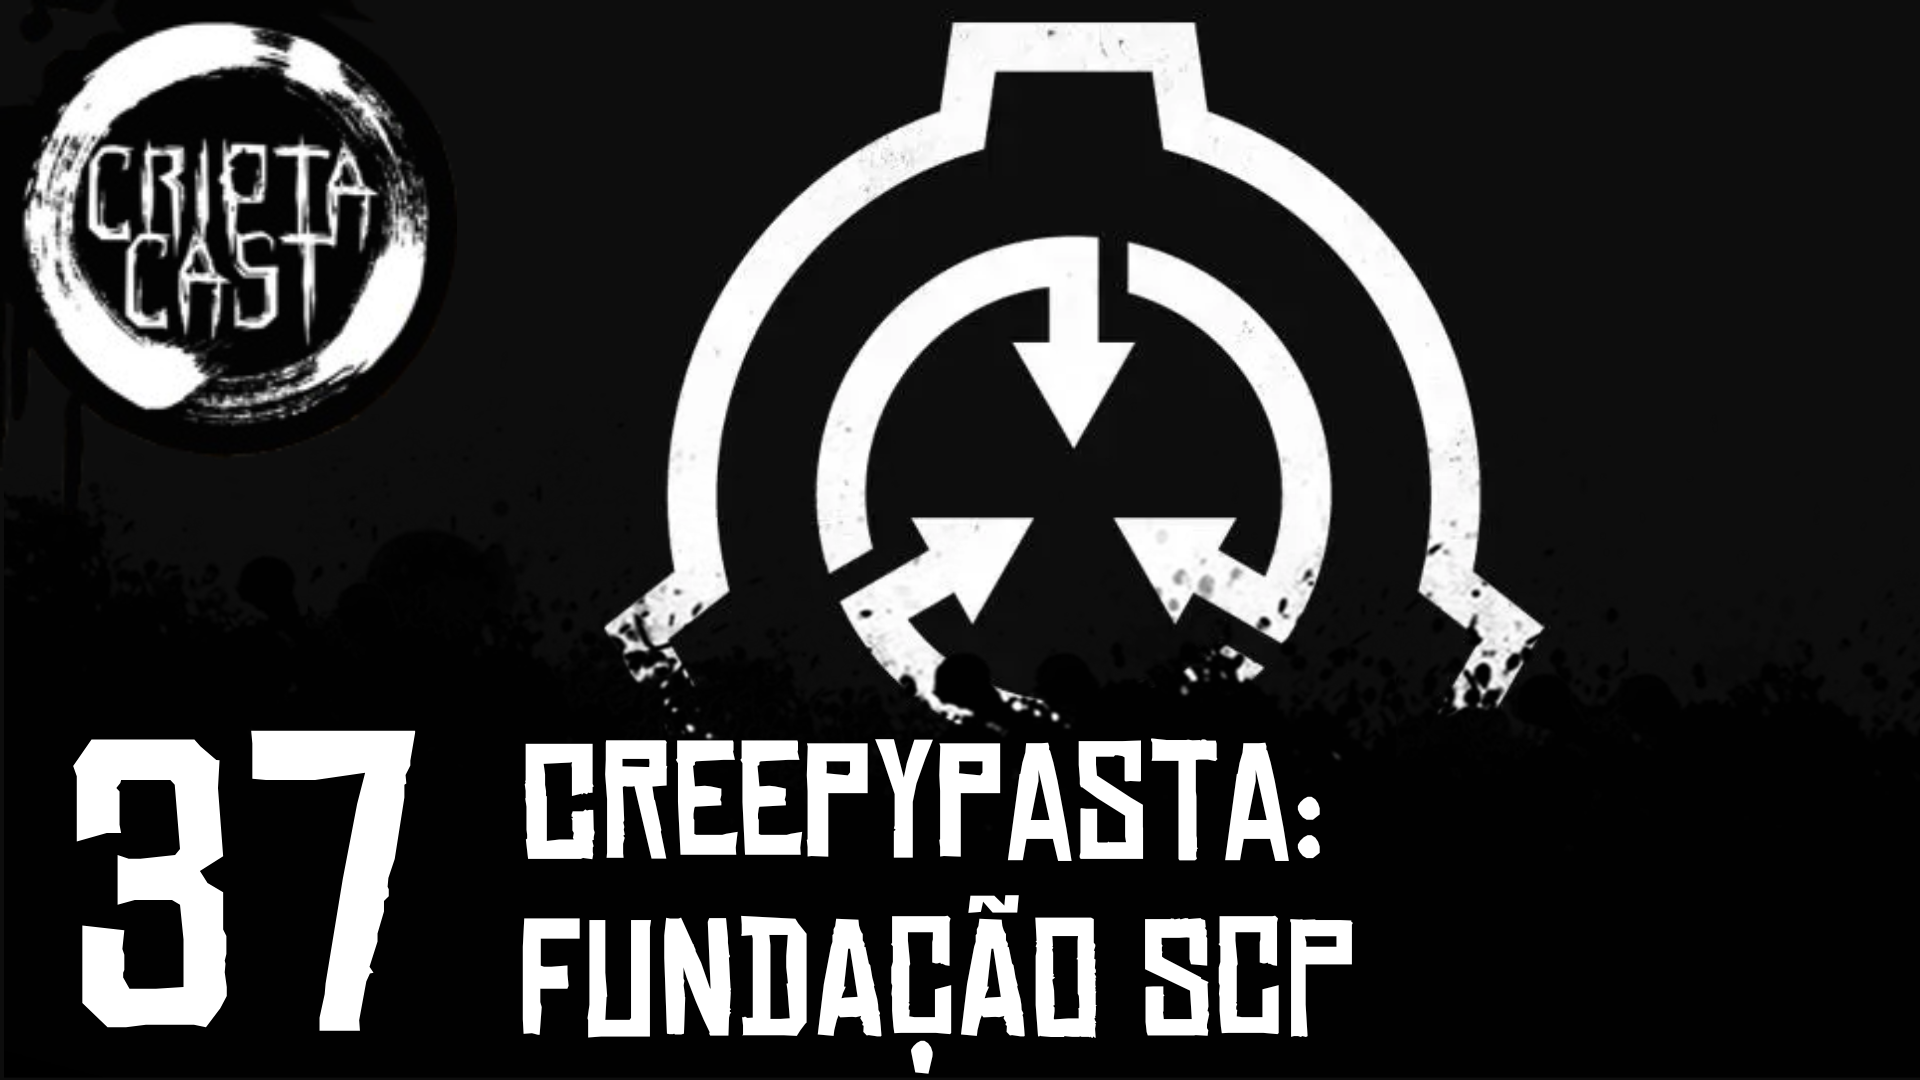 Fundação SCP Brasil